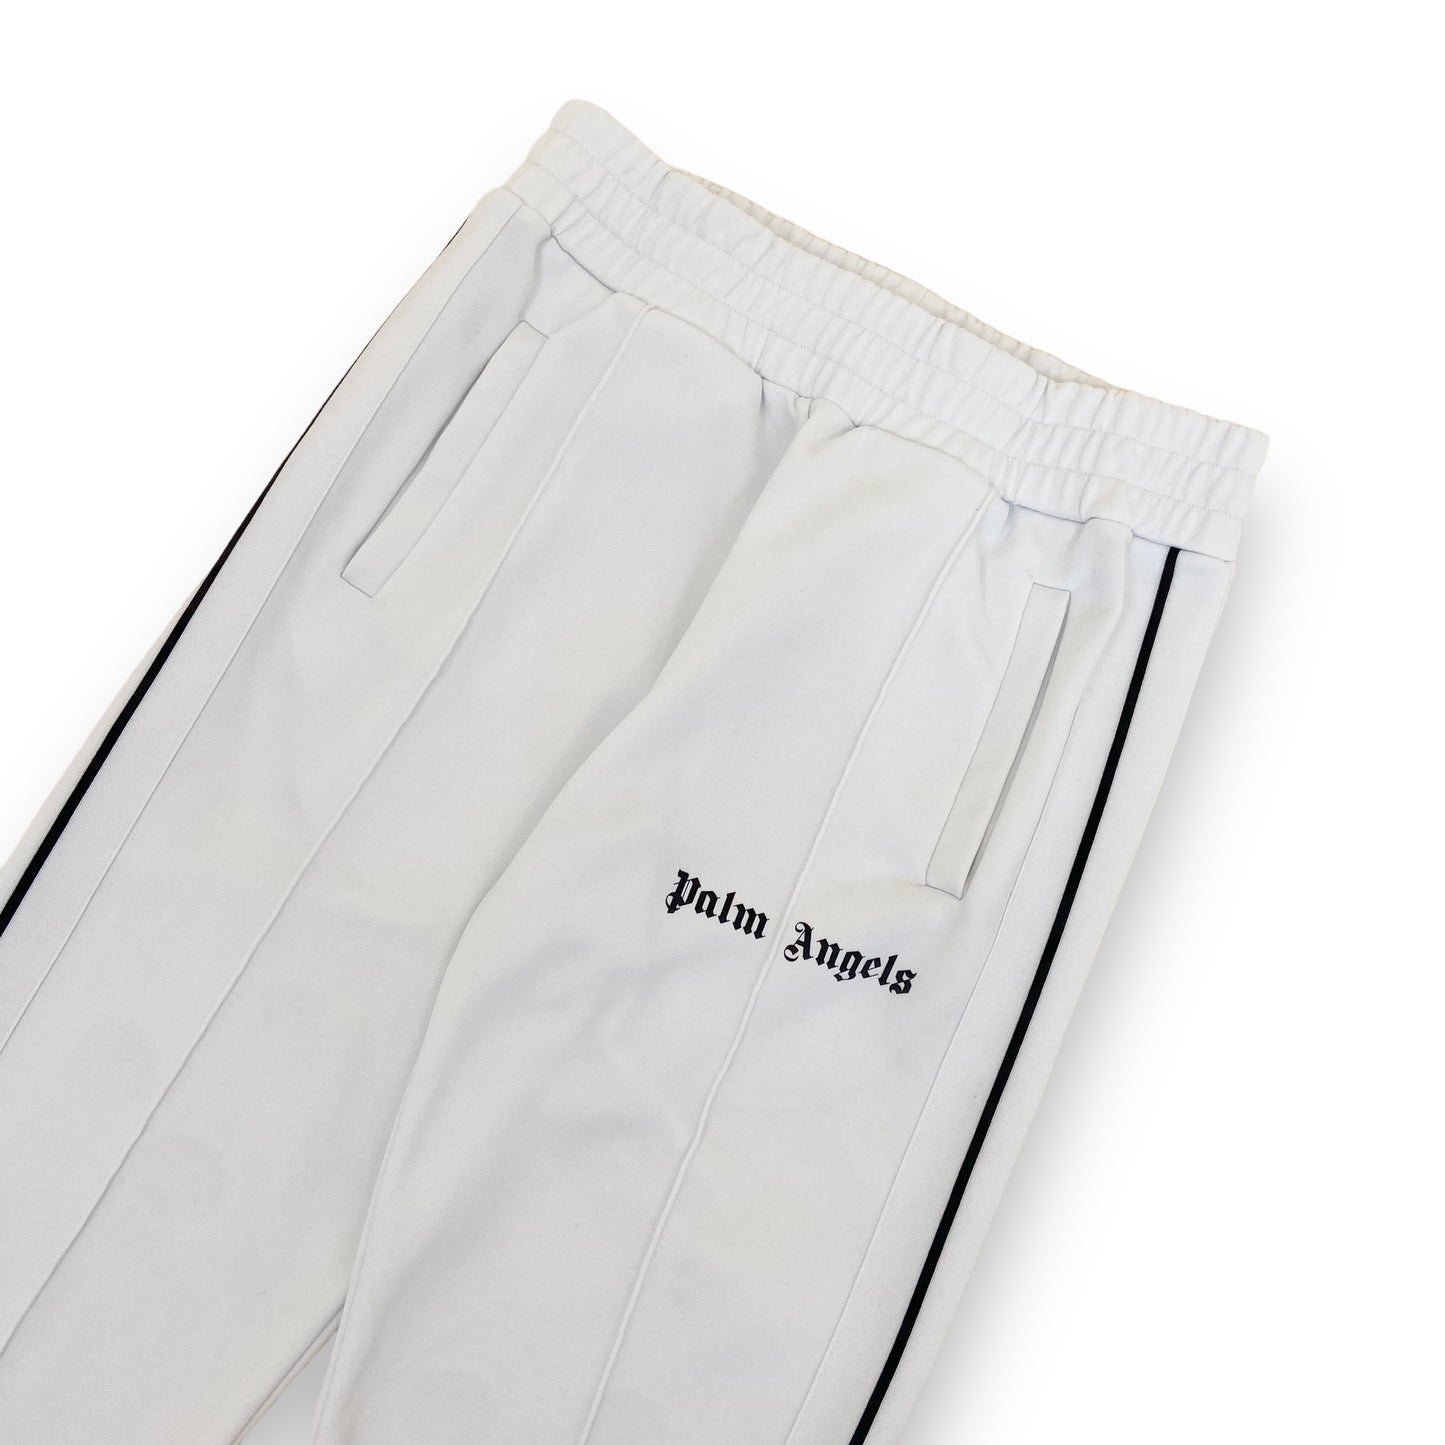 PALM ANGELS TRACK PANTS WHITE M